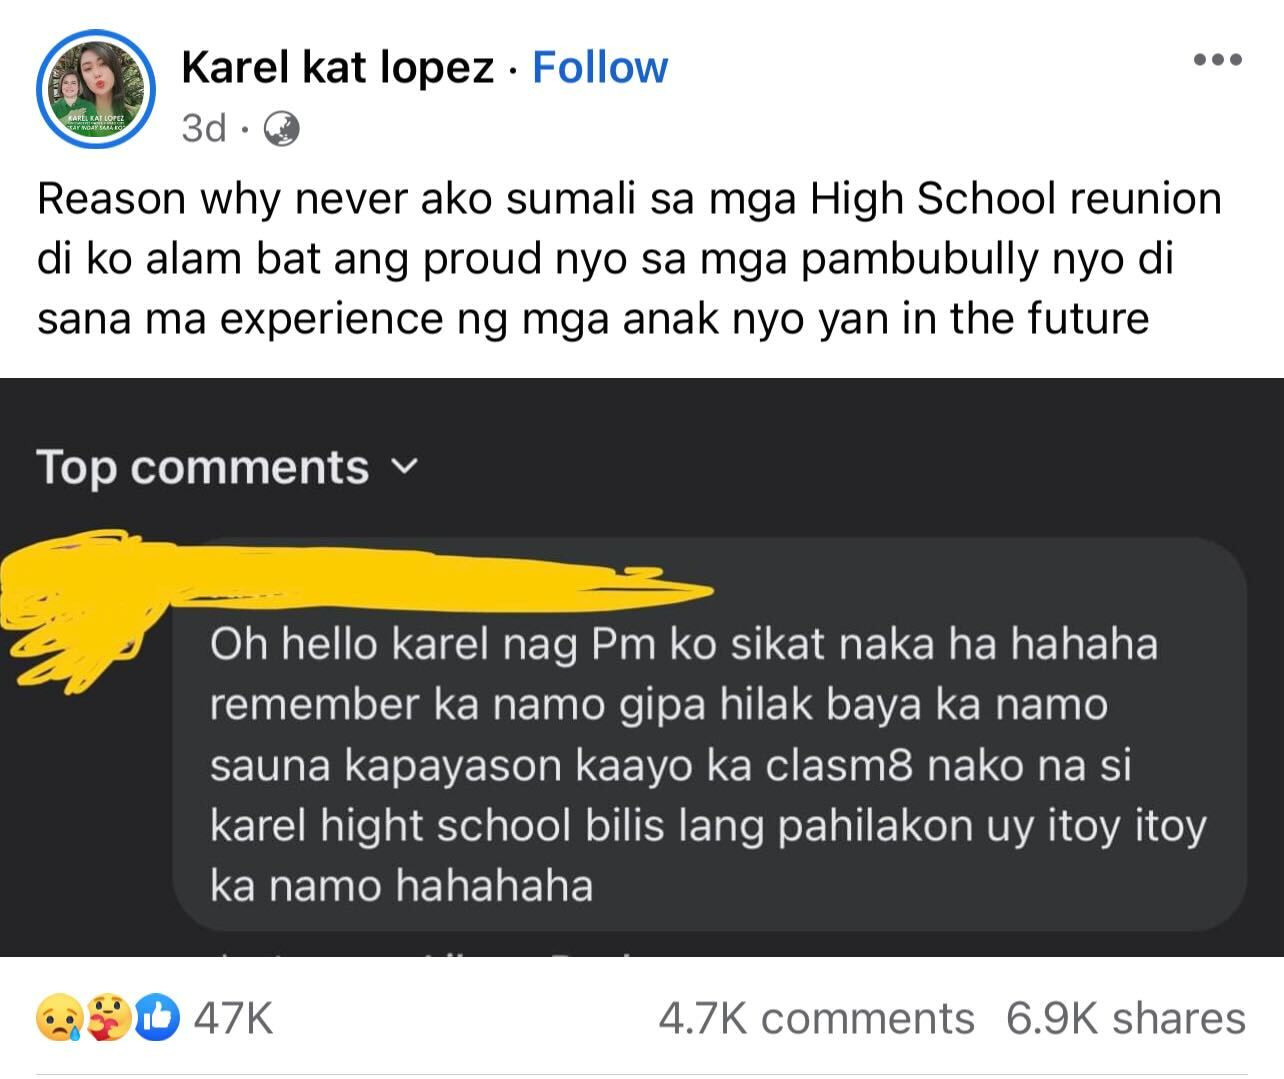 Karel Kat Lopez shares bullying experience